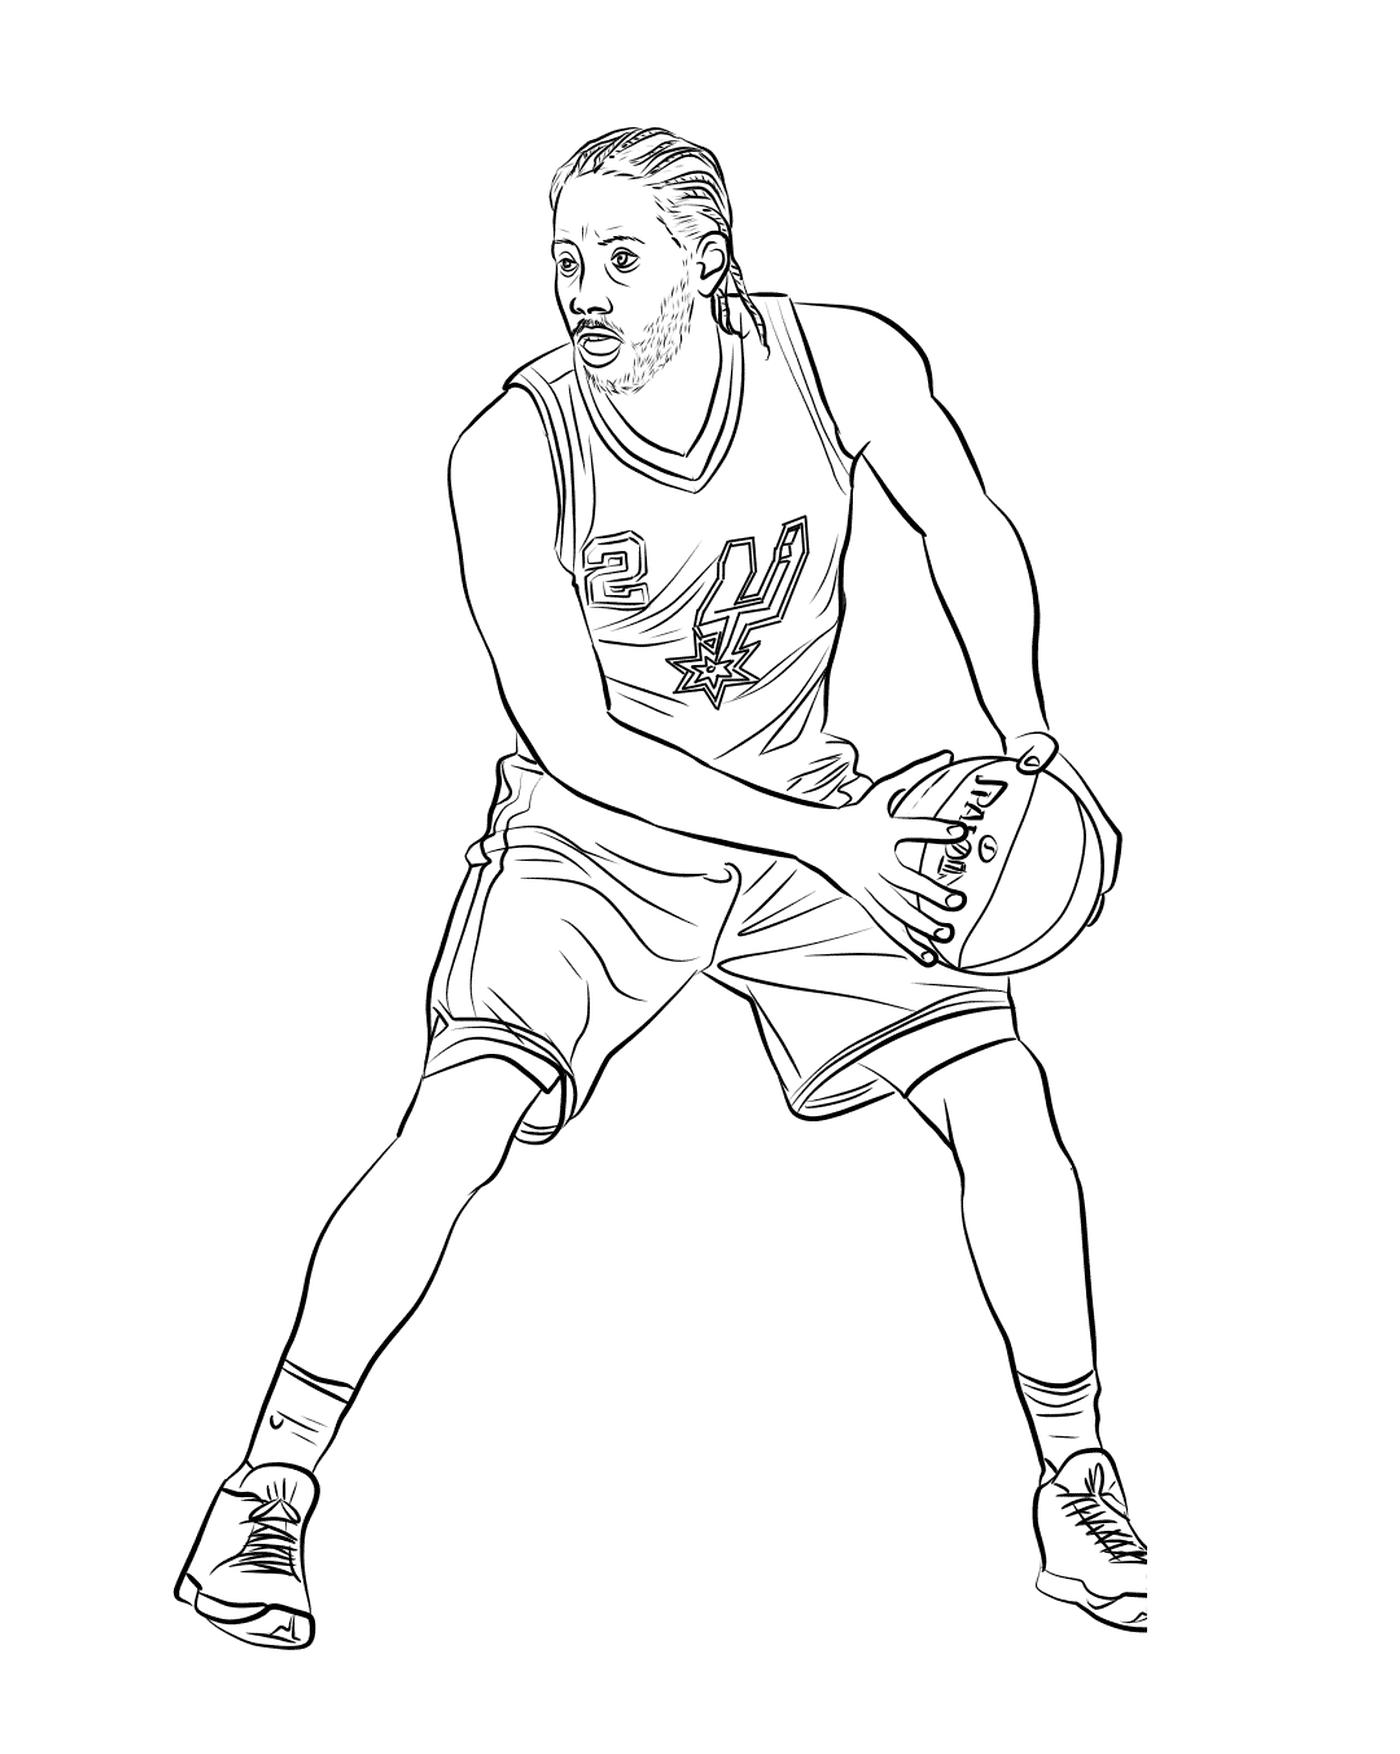  Kawhi Leonard, Basketballspieler 